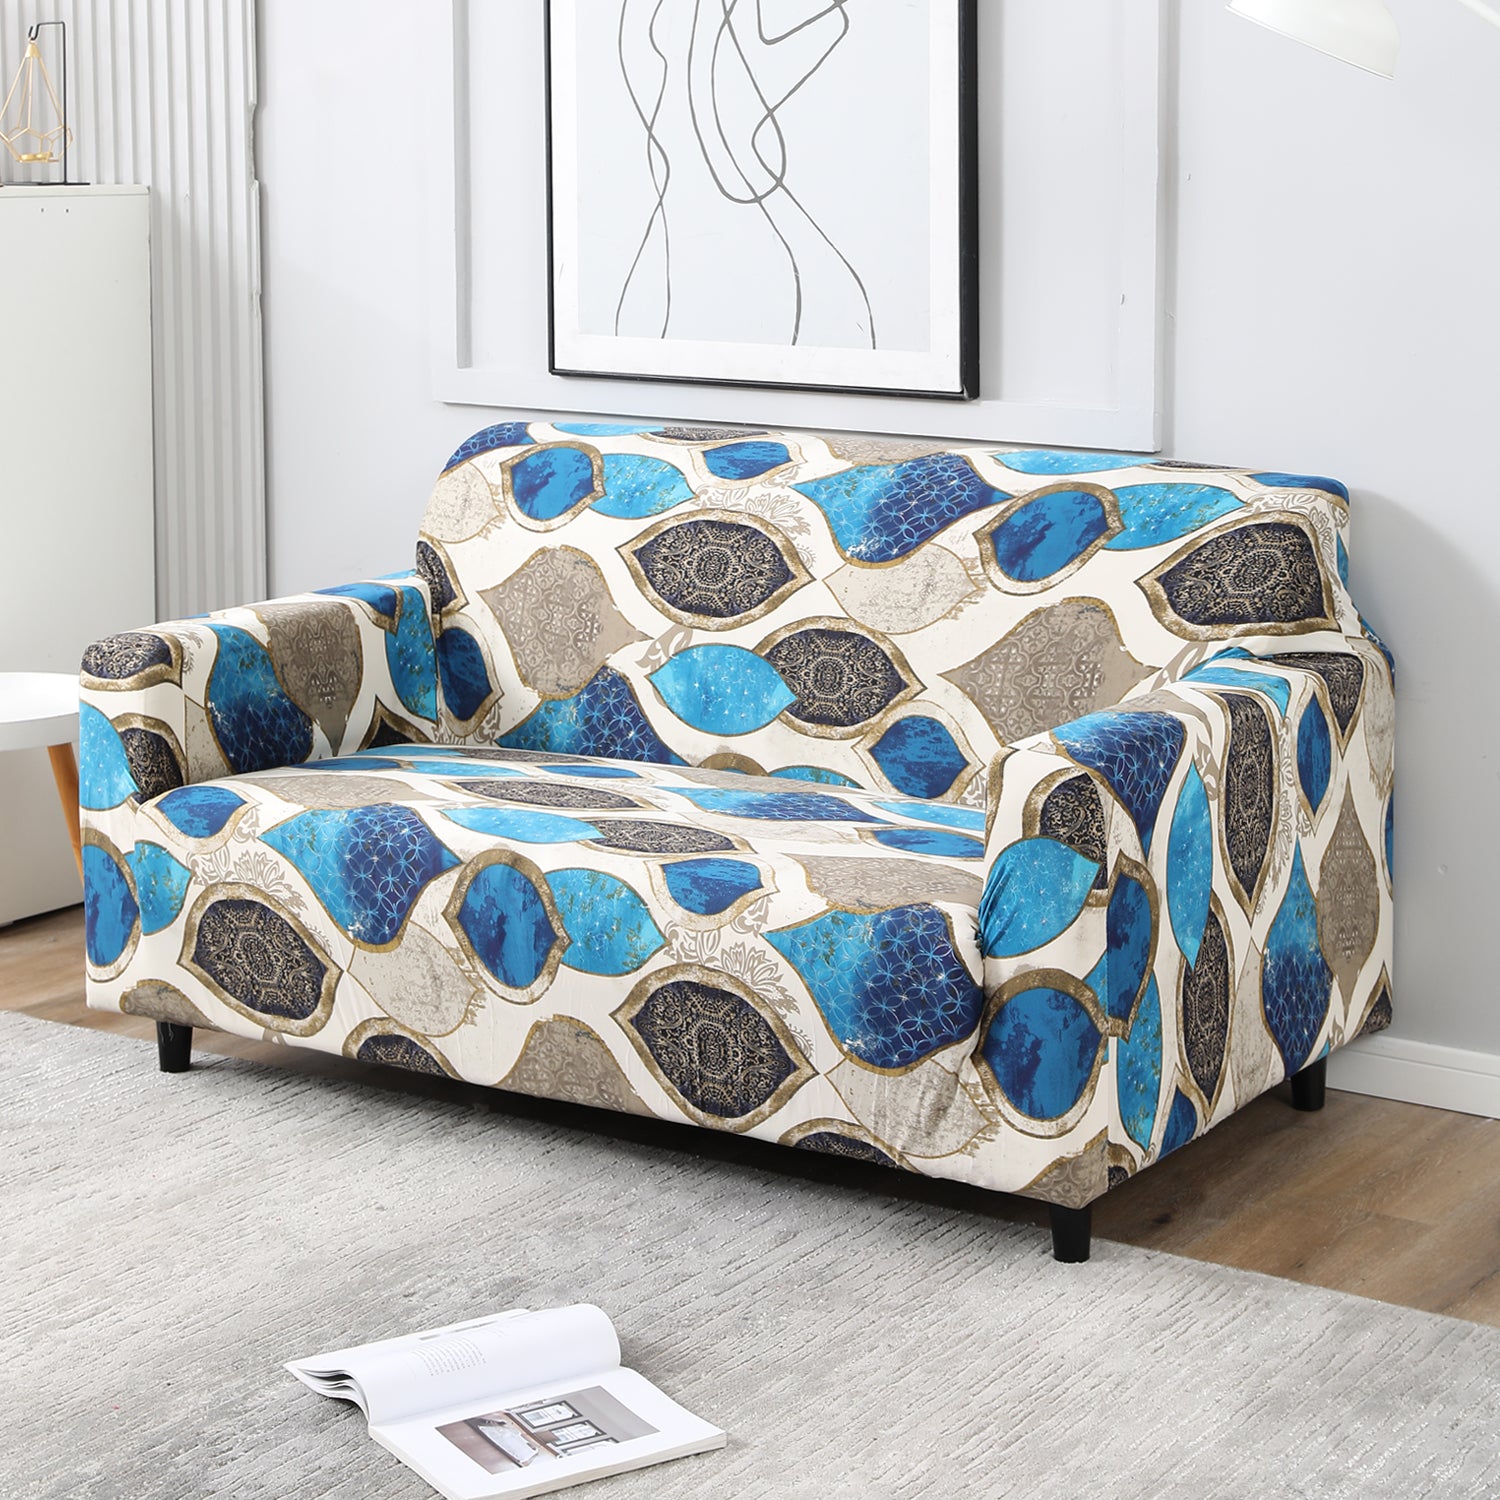 Elastic Stretchable Printed Sofa Cover, Egyptian Art Print